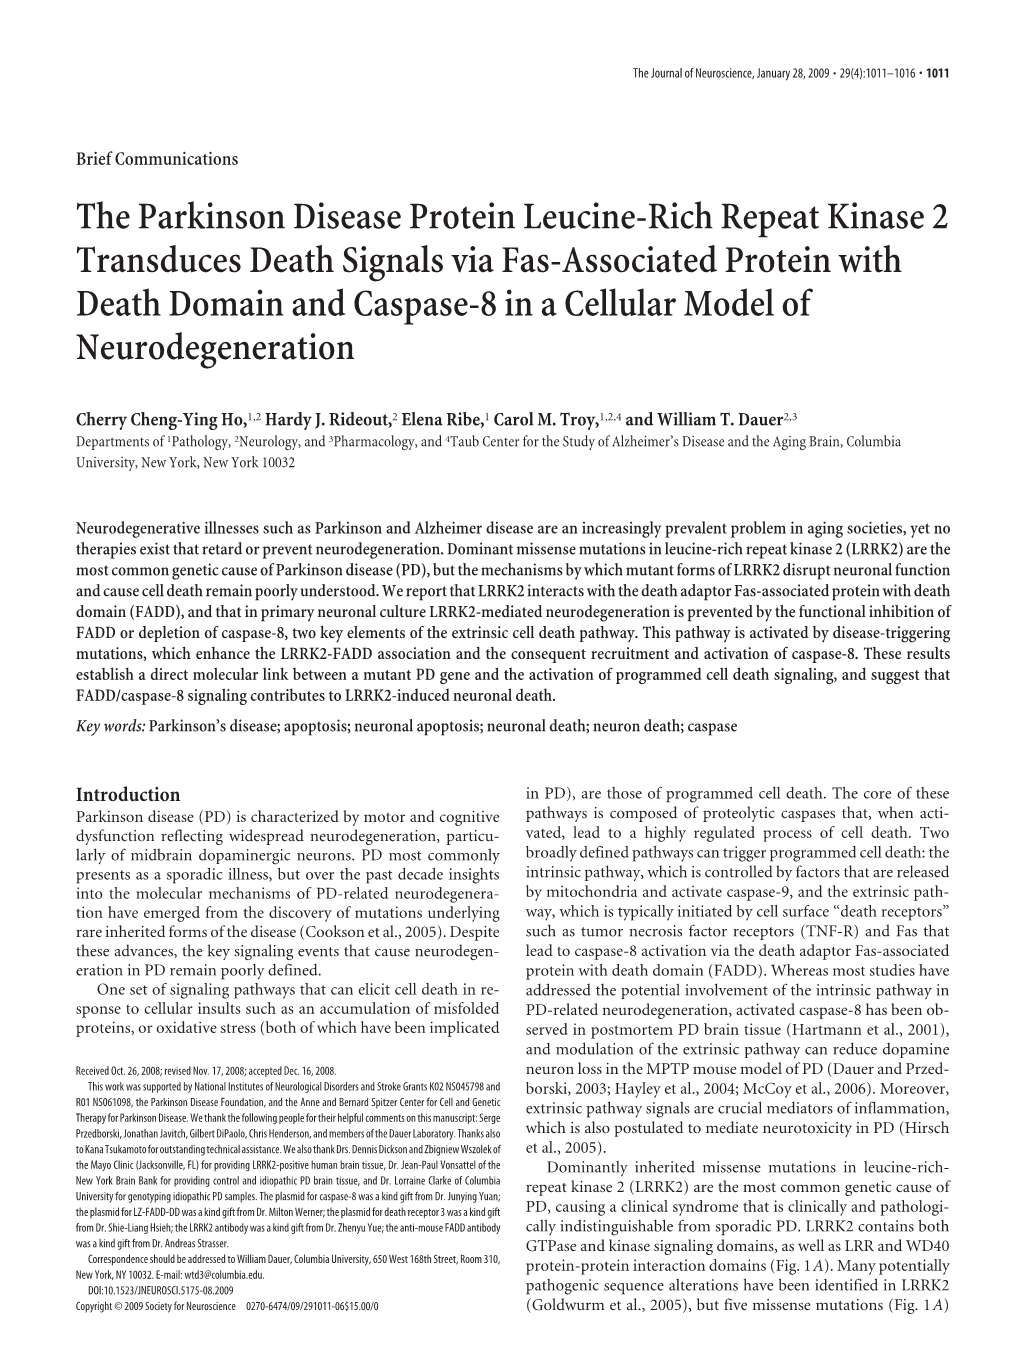 The Parkinson Disease Protein Leucine-Rich Repeat Kinase 2